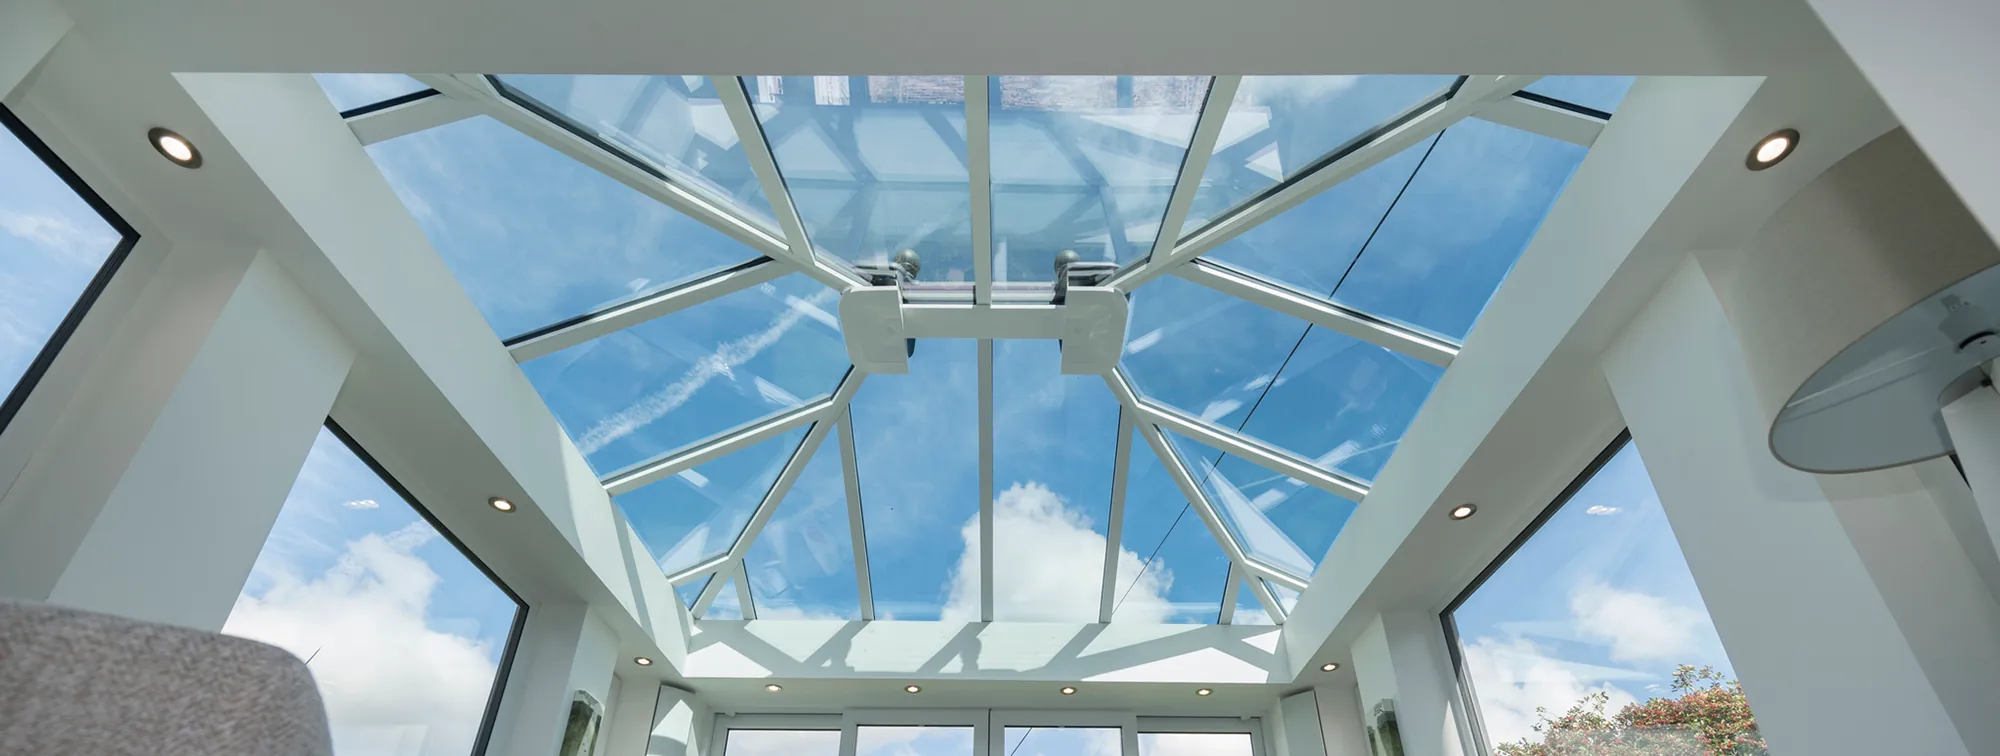 Ultraframe Glass Roofs